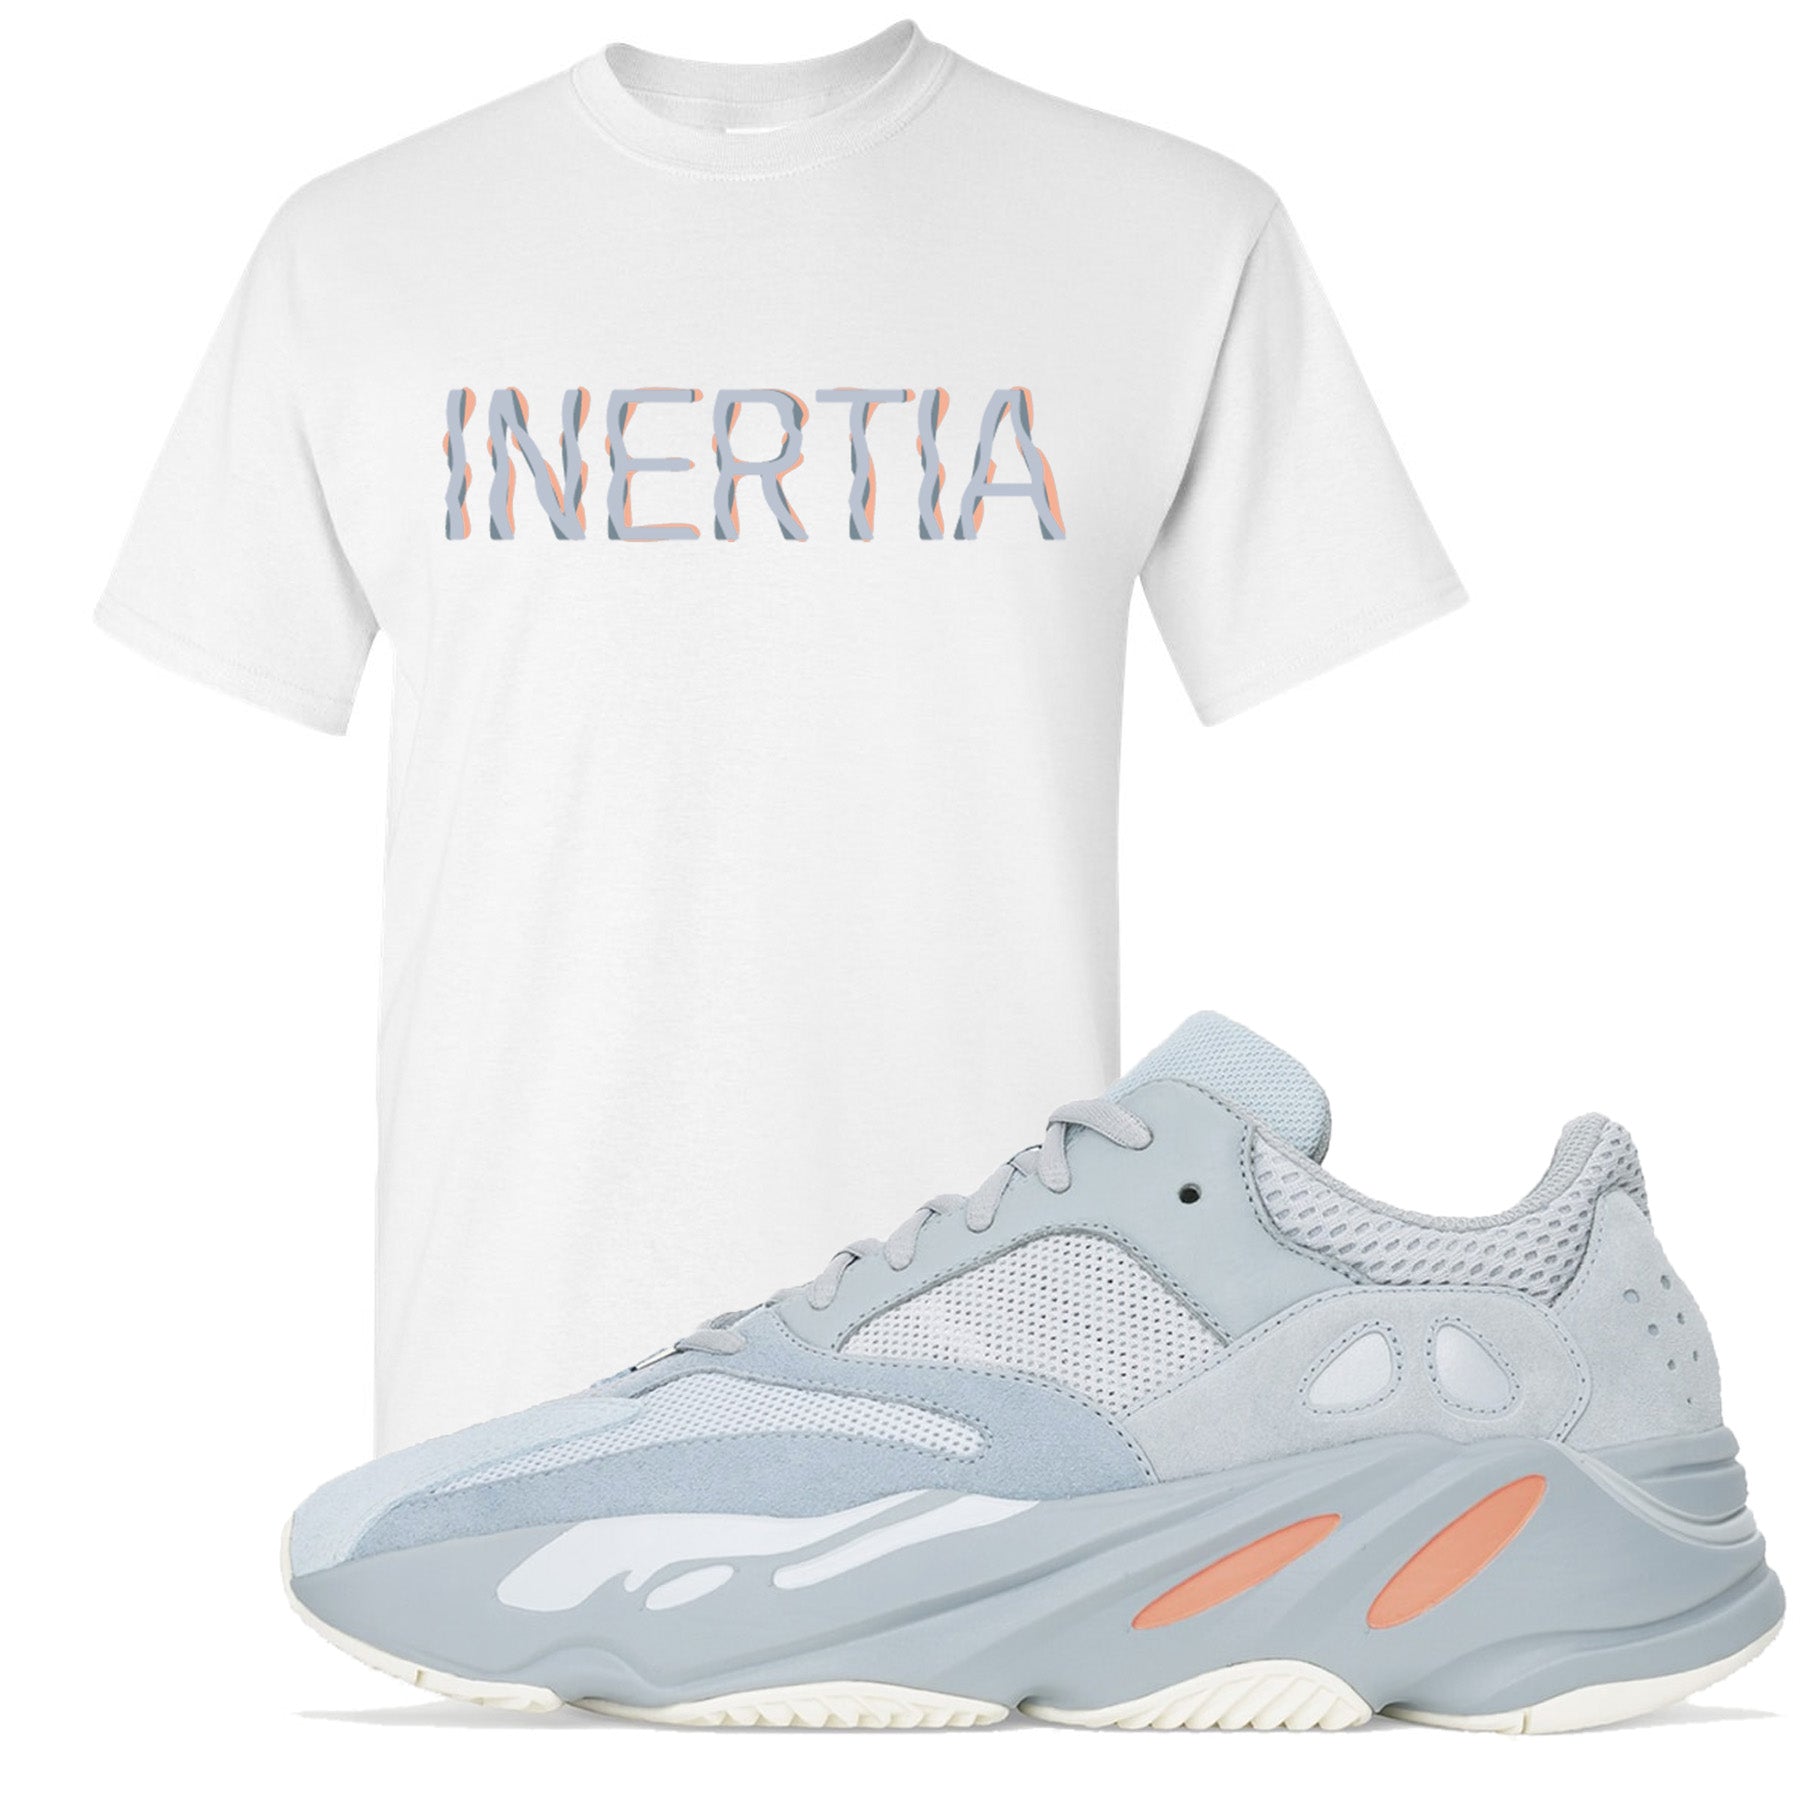 inertia yeezy shirt